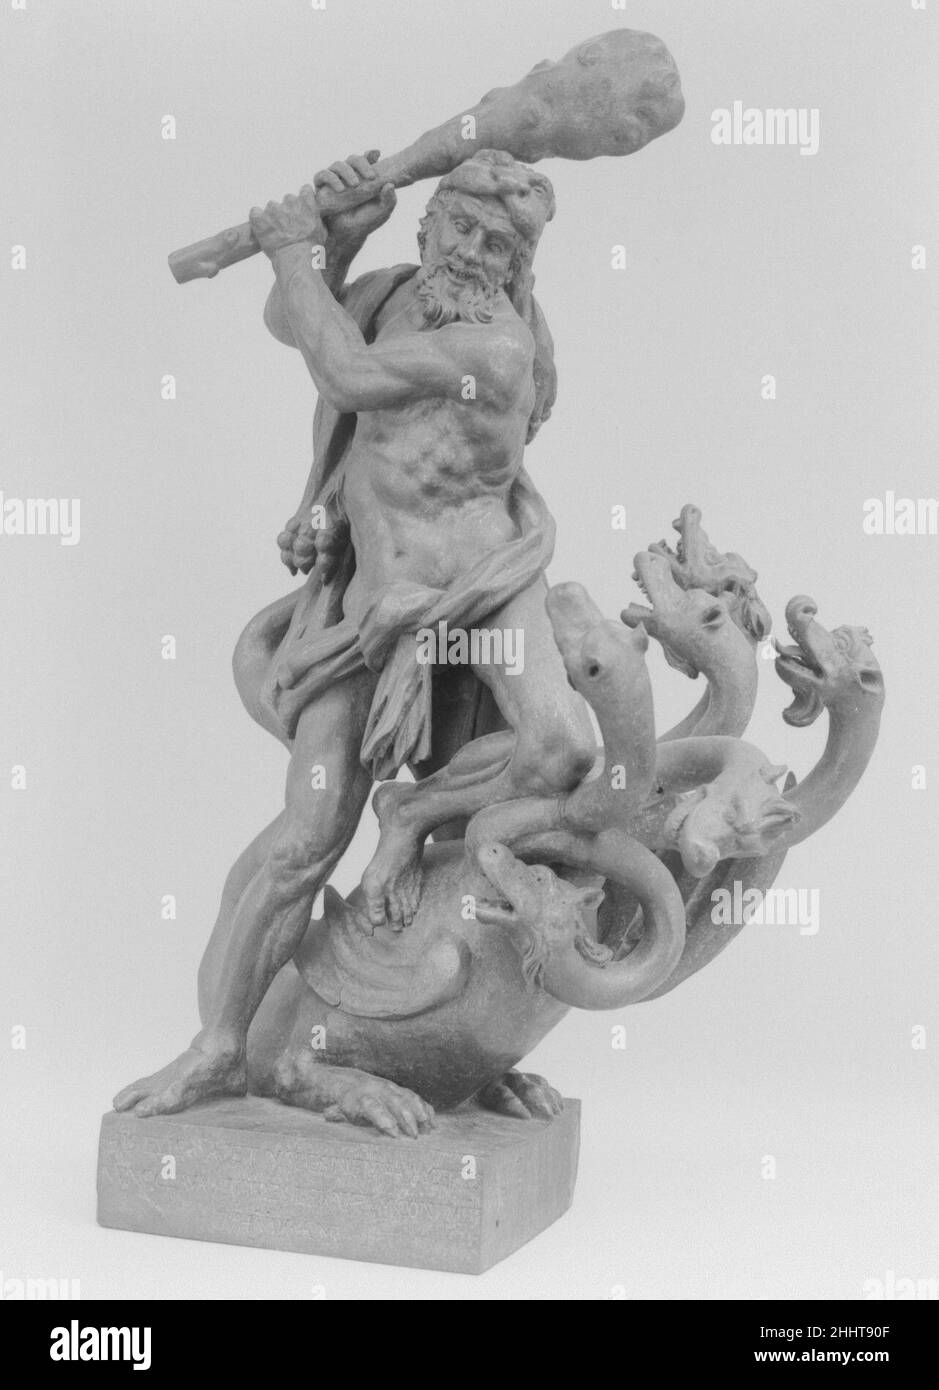 Herkules erschlugt die Hydra 17th Jahrhundert Italienisch. Herkules erschlagt die Hydra. Italienisch. 17th Jahrhundert. Holz. Skulptur Stockfoto